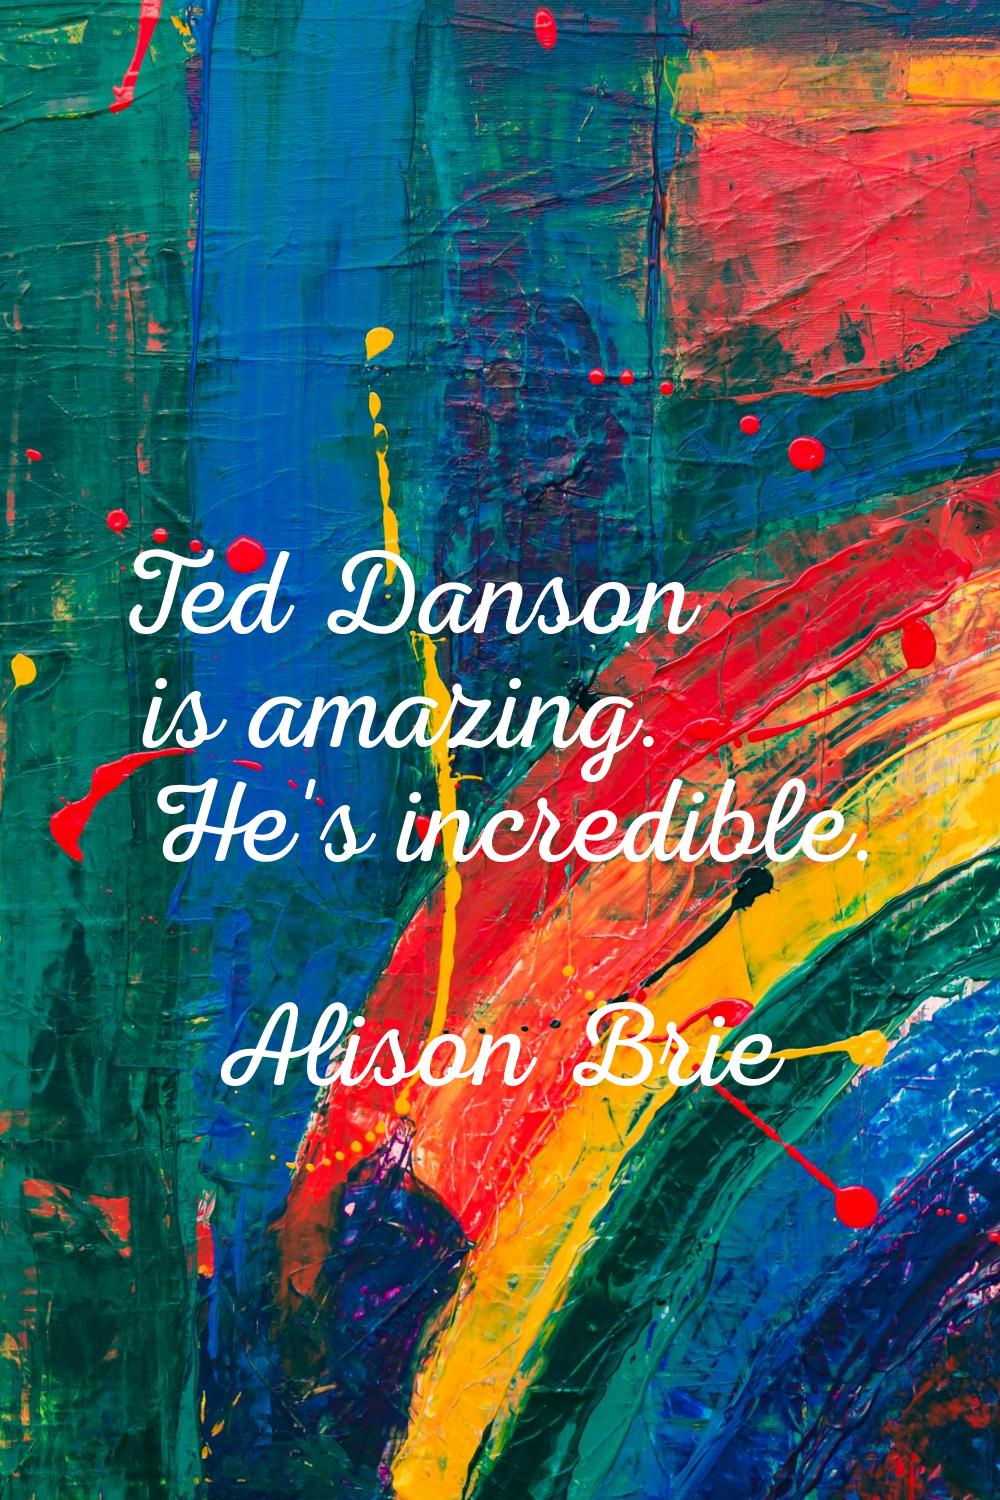 Ted Danson is amazing. He's incredible.